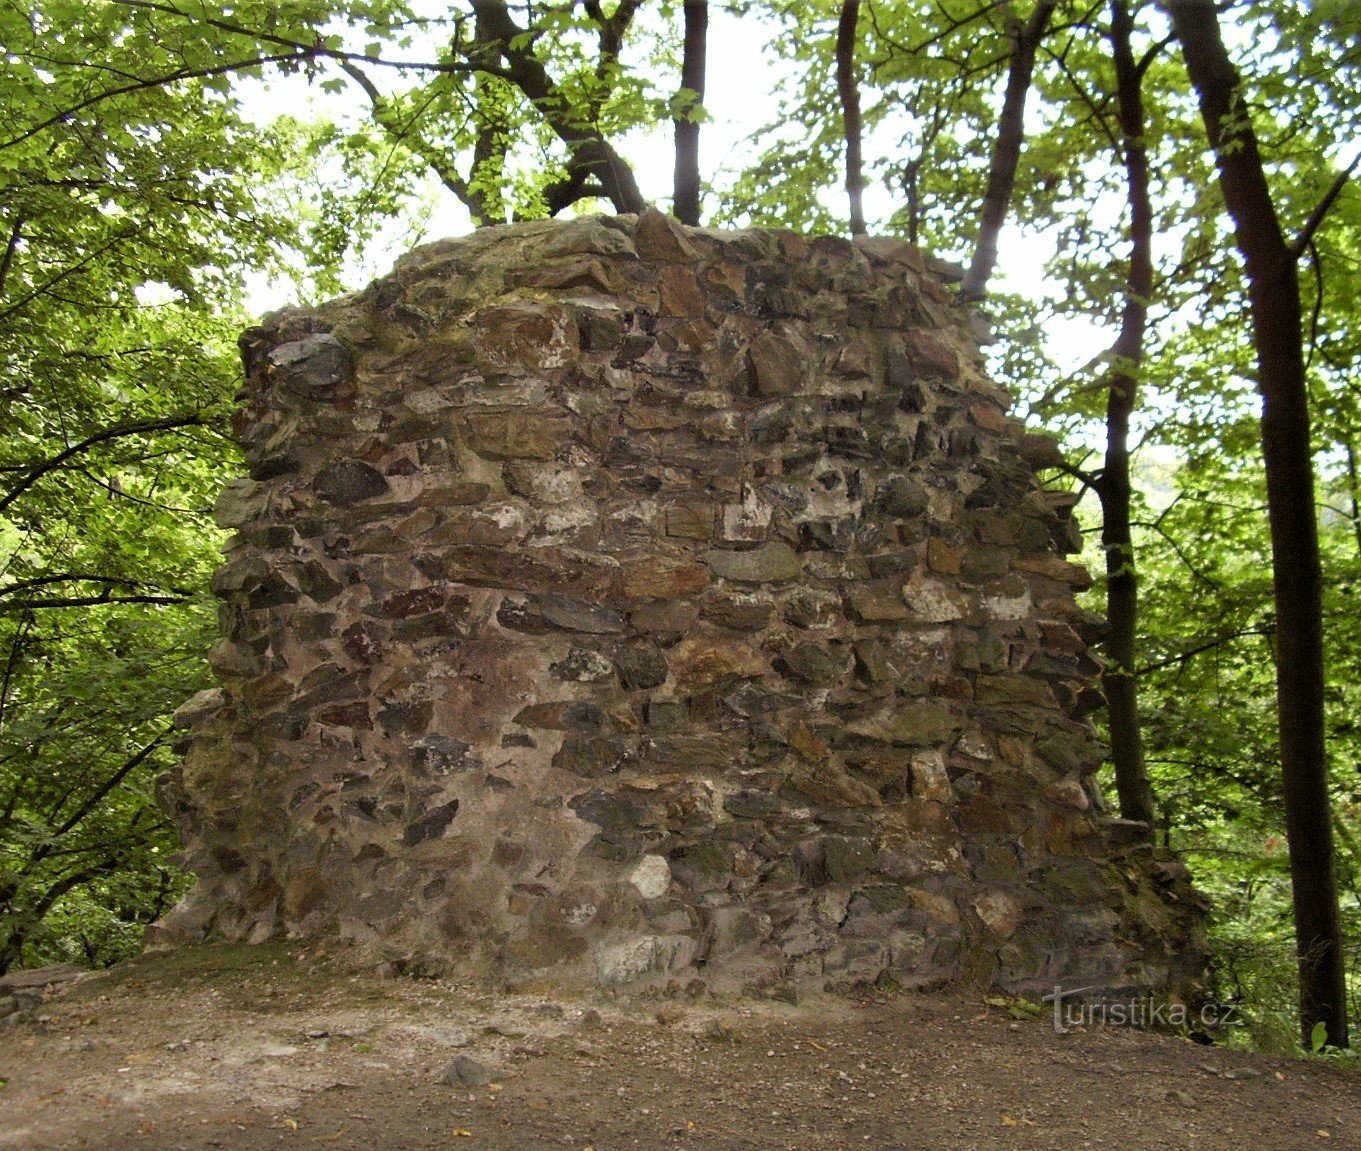 The ruins of Hamrštejn Castle